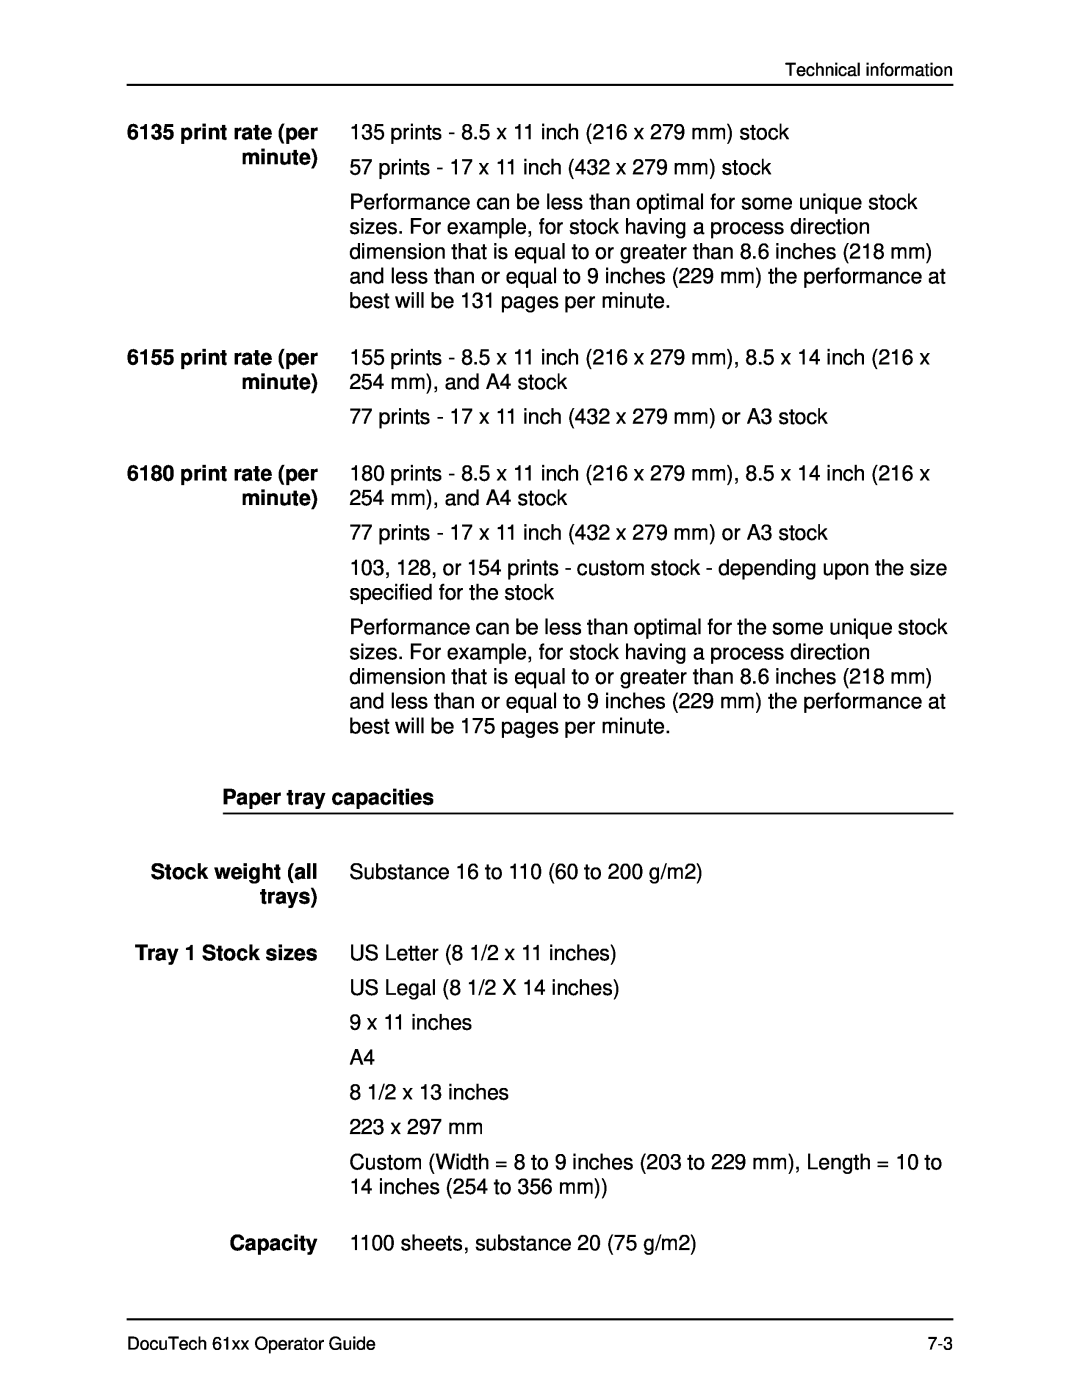 Xerox 61xx manual print rate per minute 6155 print rate per minute, Paper tray capacities 